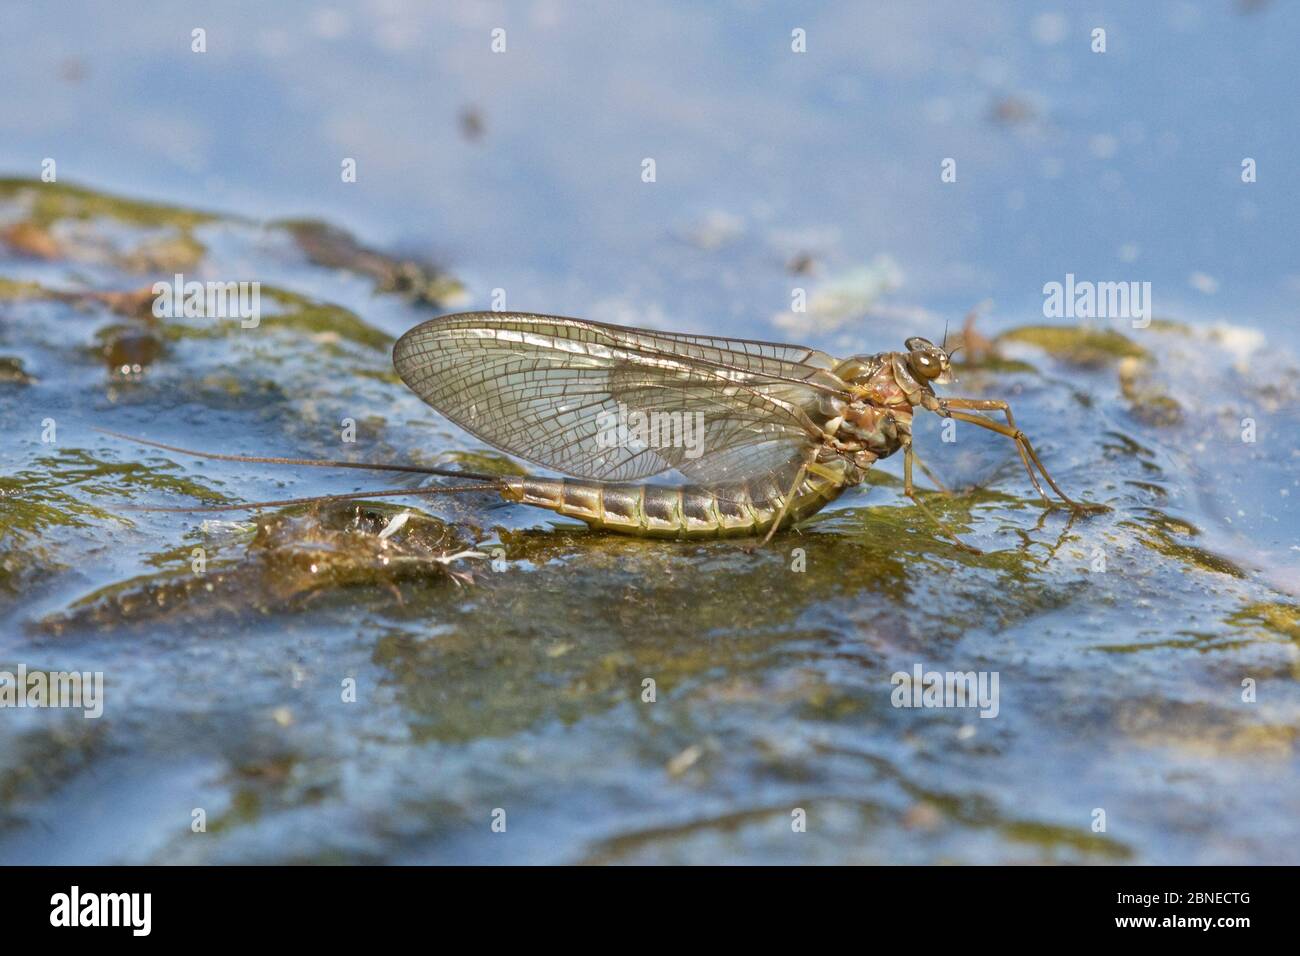 Summer mayfly (Siphlonurus lacustris) adult emerging, Europe, May Stock Photo